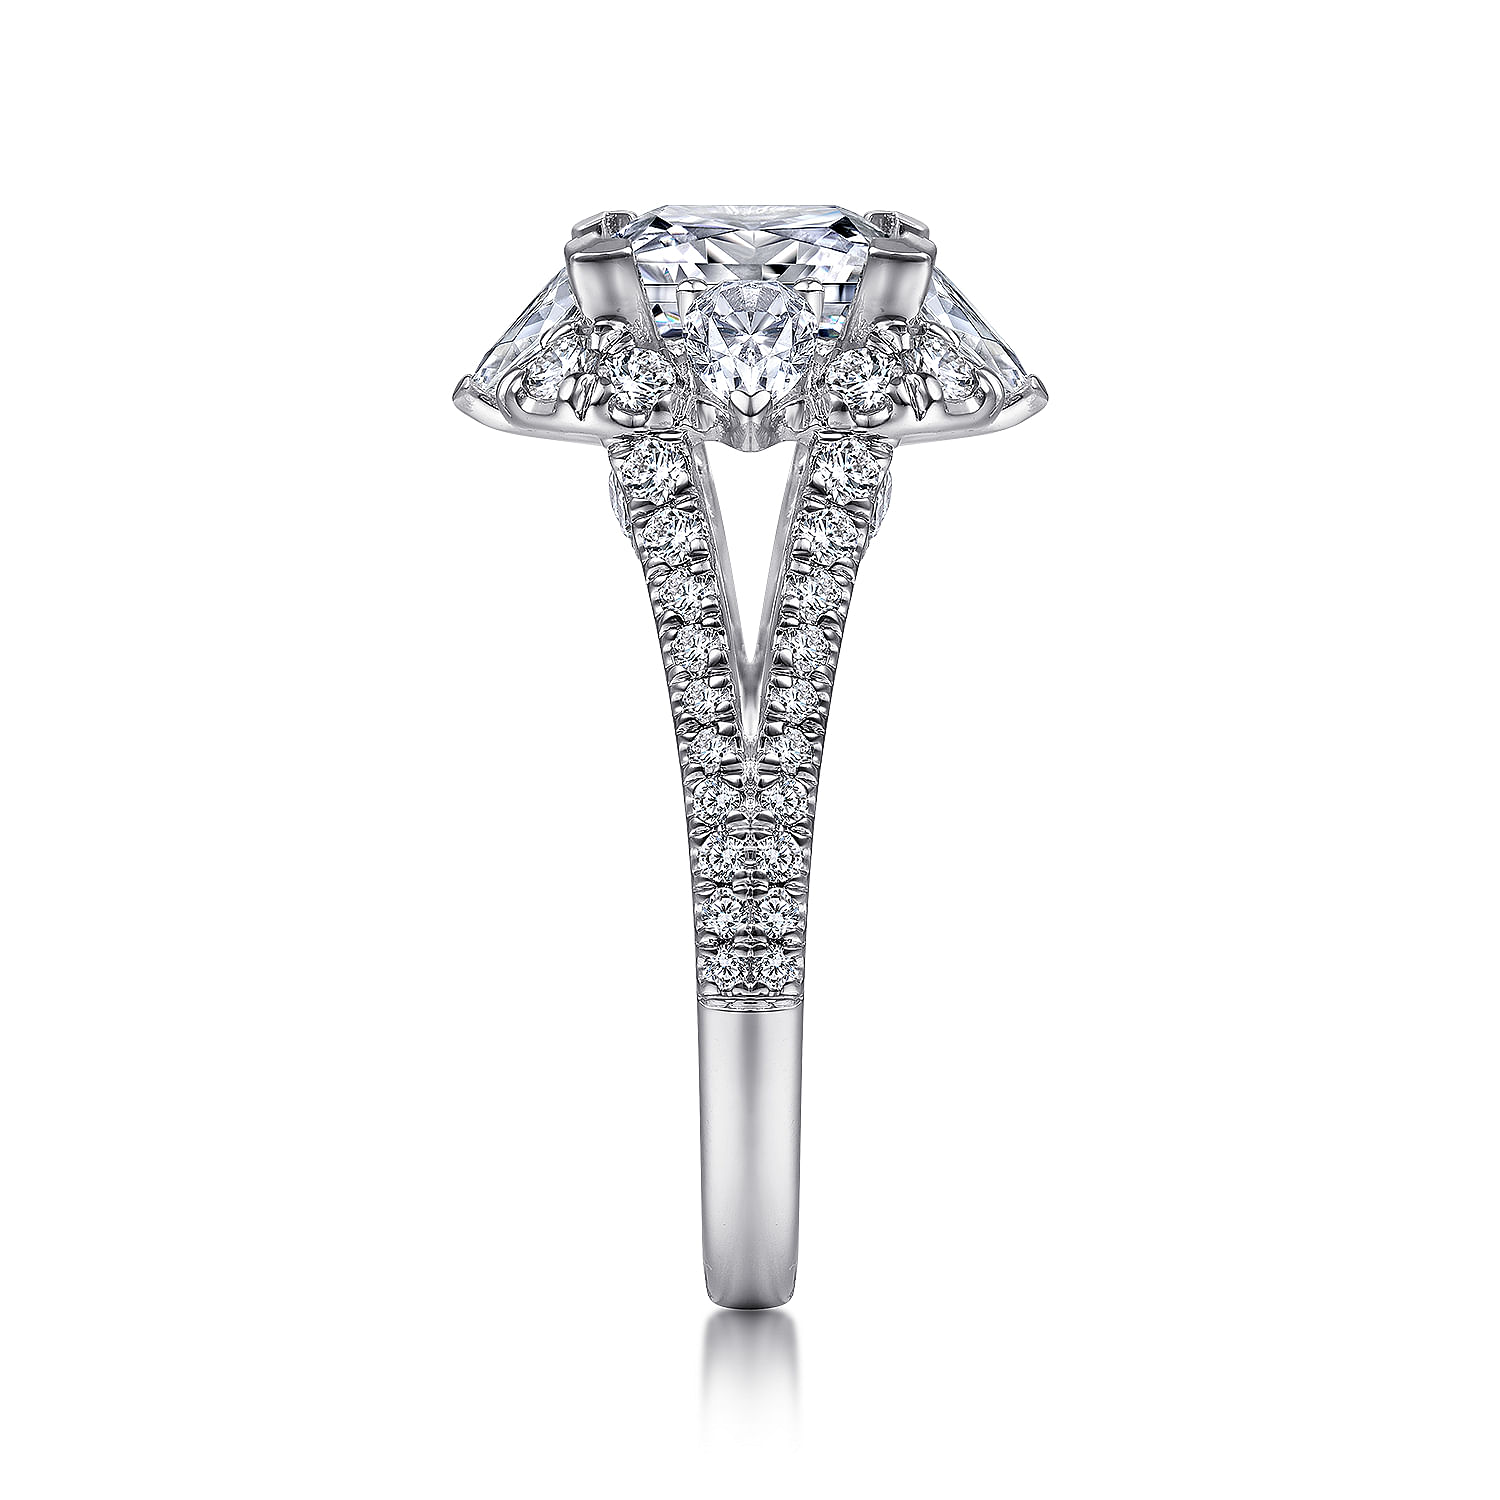 Art Deco 14K White Gold Fancy Halo Princess Cut Diamond Engagement Ring